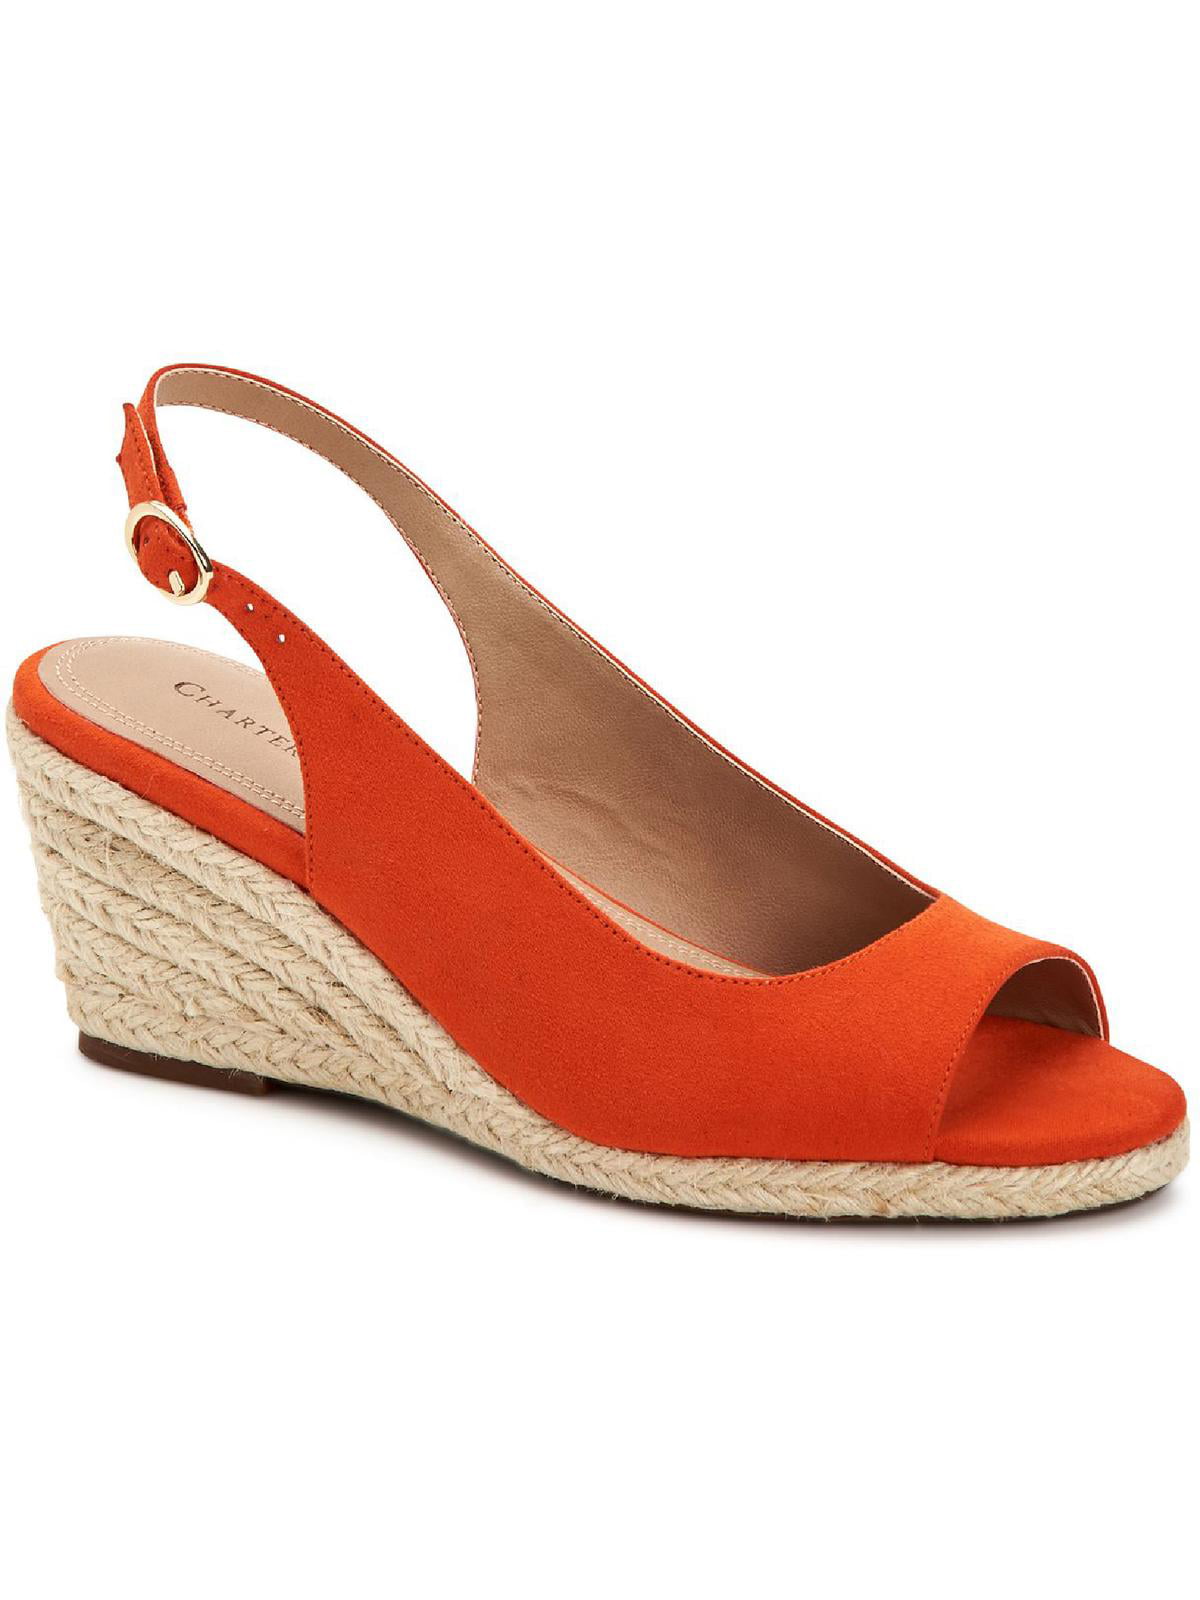 Details about   Sale Ladies Spot On Canvas Wedge Heel Summer Sandals F2R260 